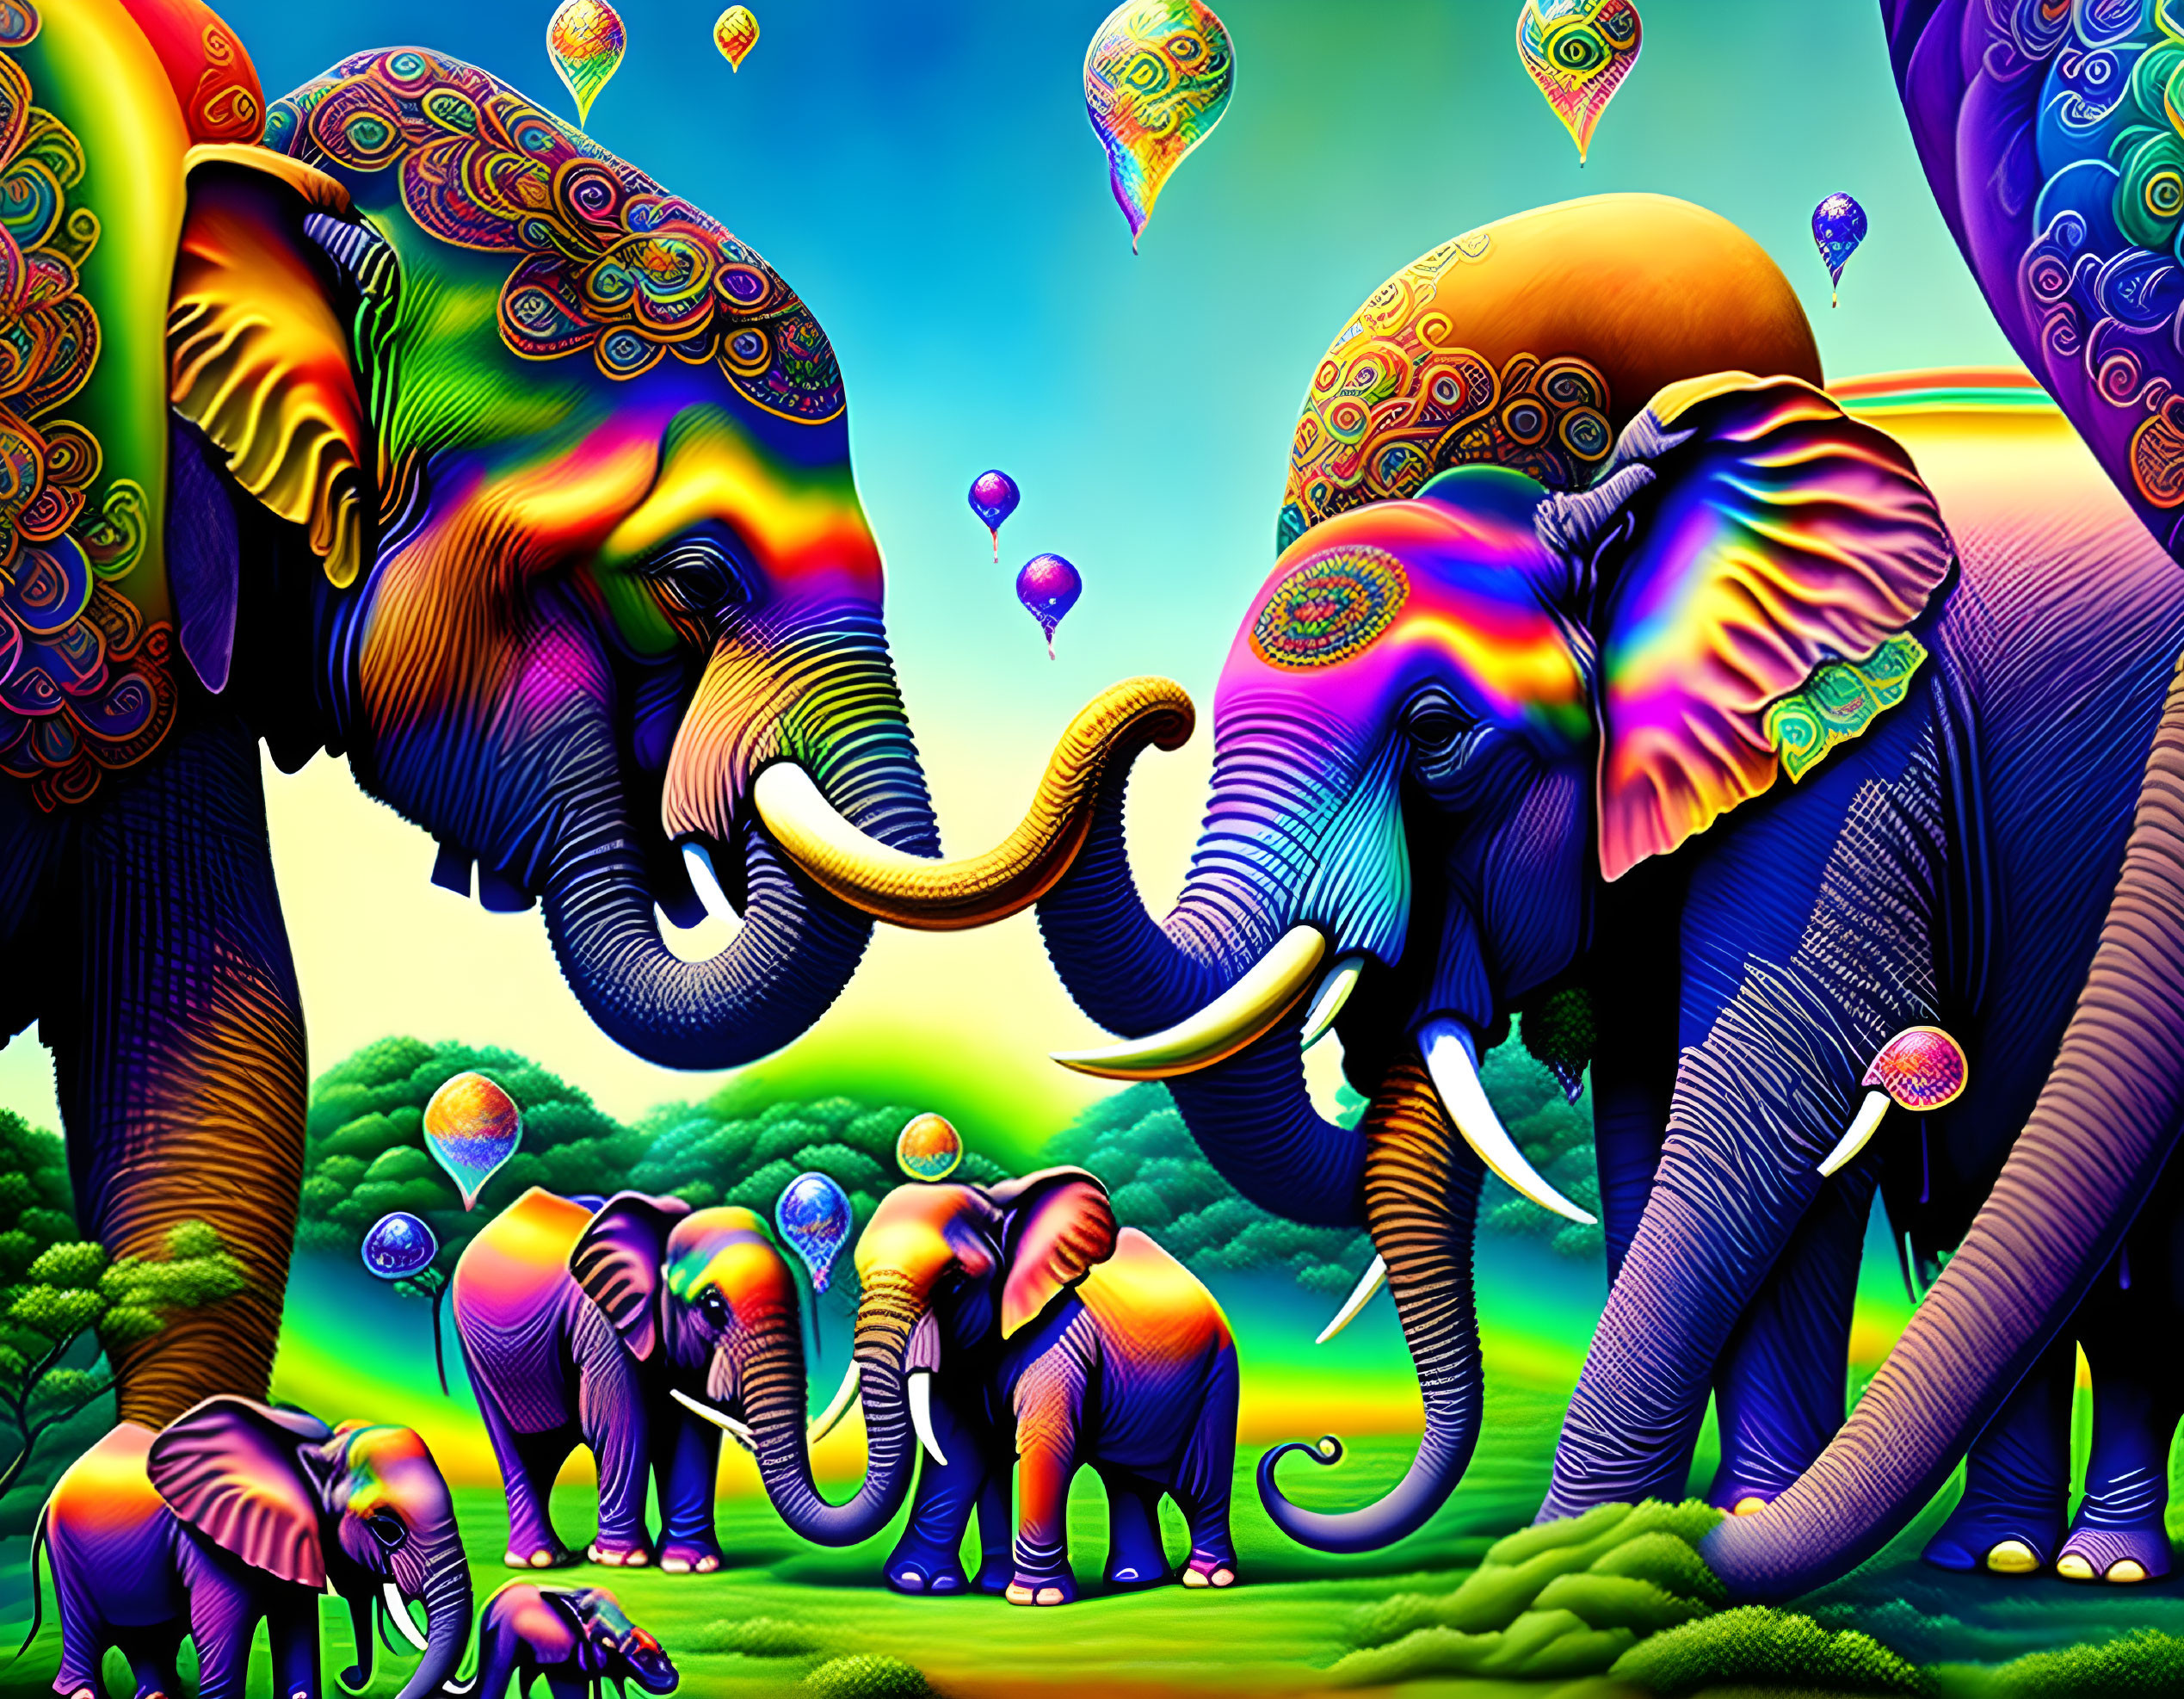 Elephants Festivals of Colors